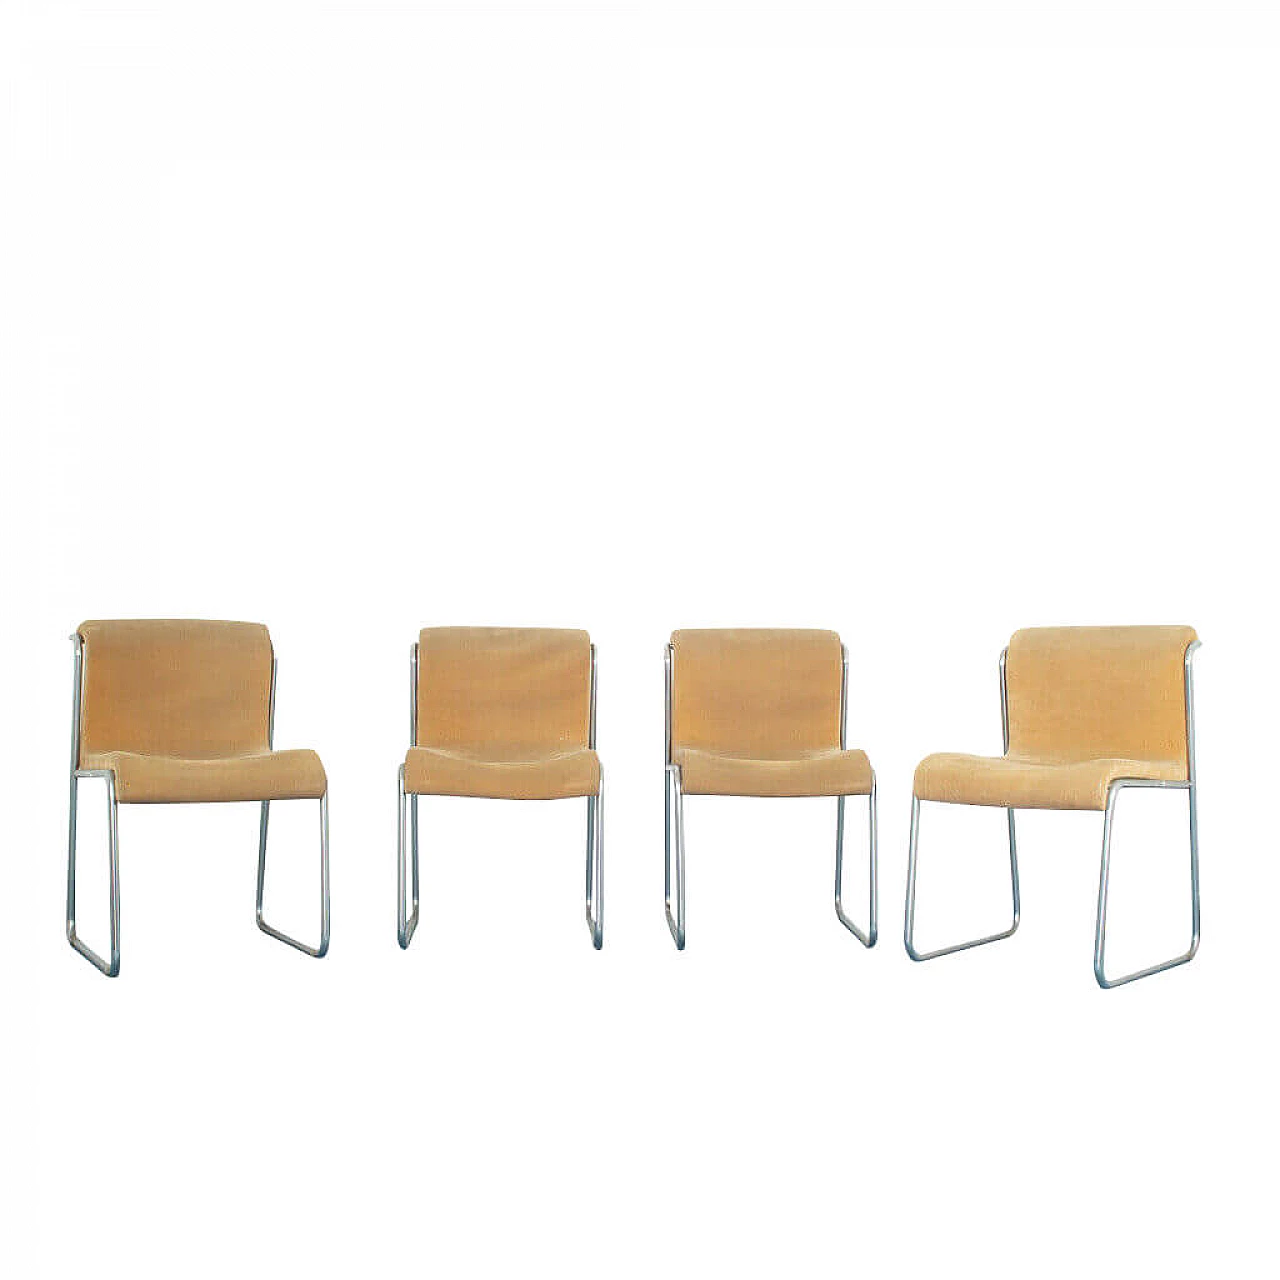 4 chairs in tubular steel and alcantara, 70s 1178007